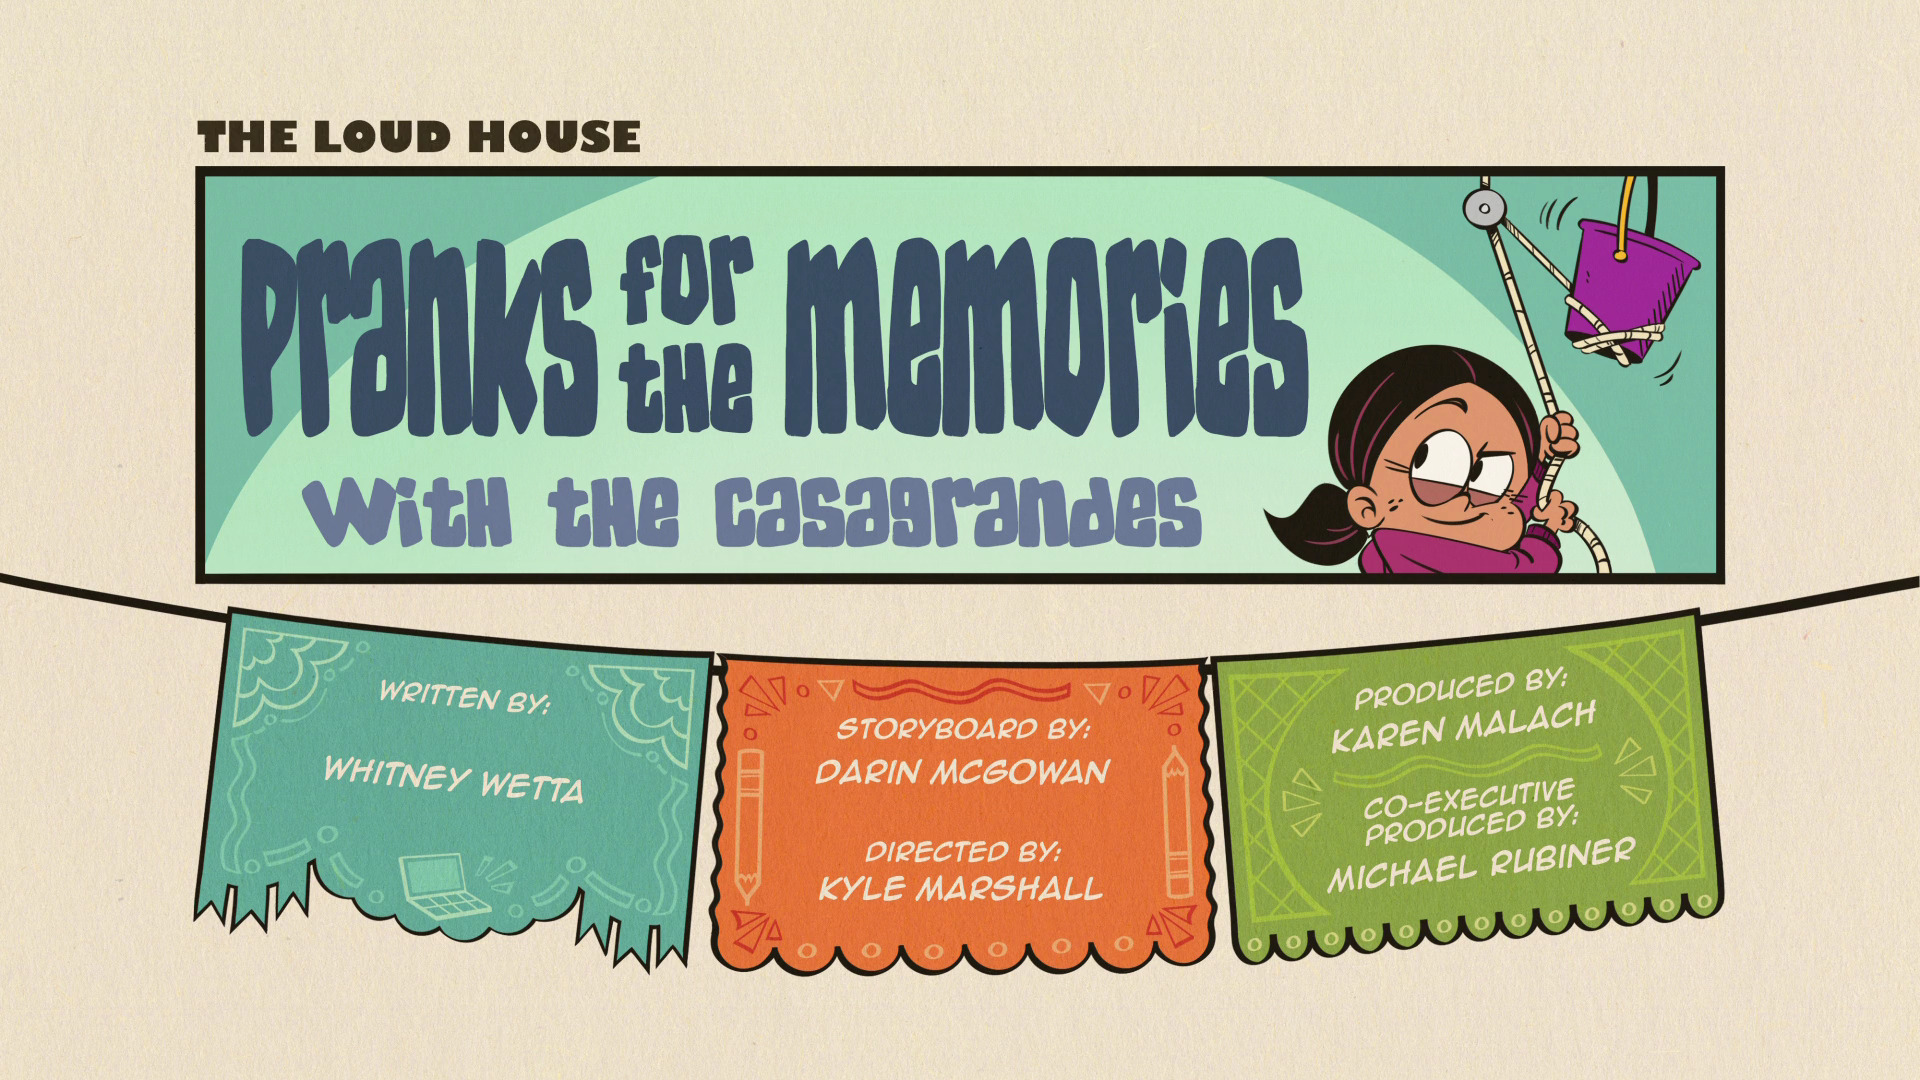 4в серия 4 сезона Pranks for the Memories with the Casagrandes / Памятные розыгрыши семьи Касагранде